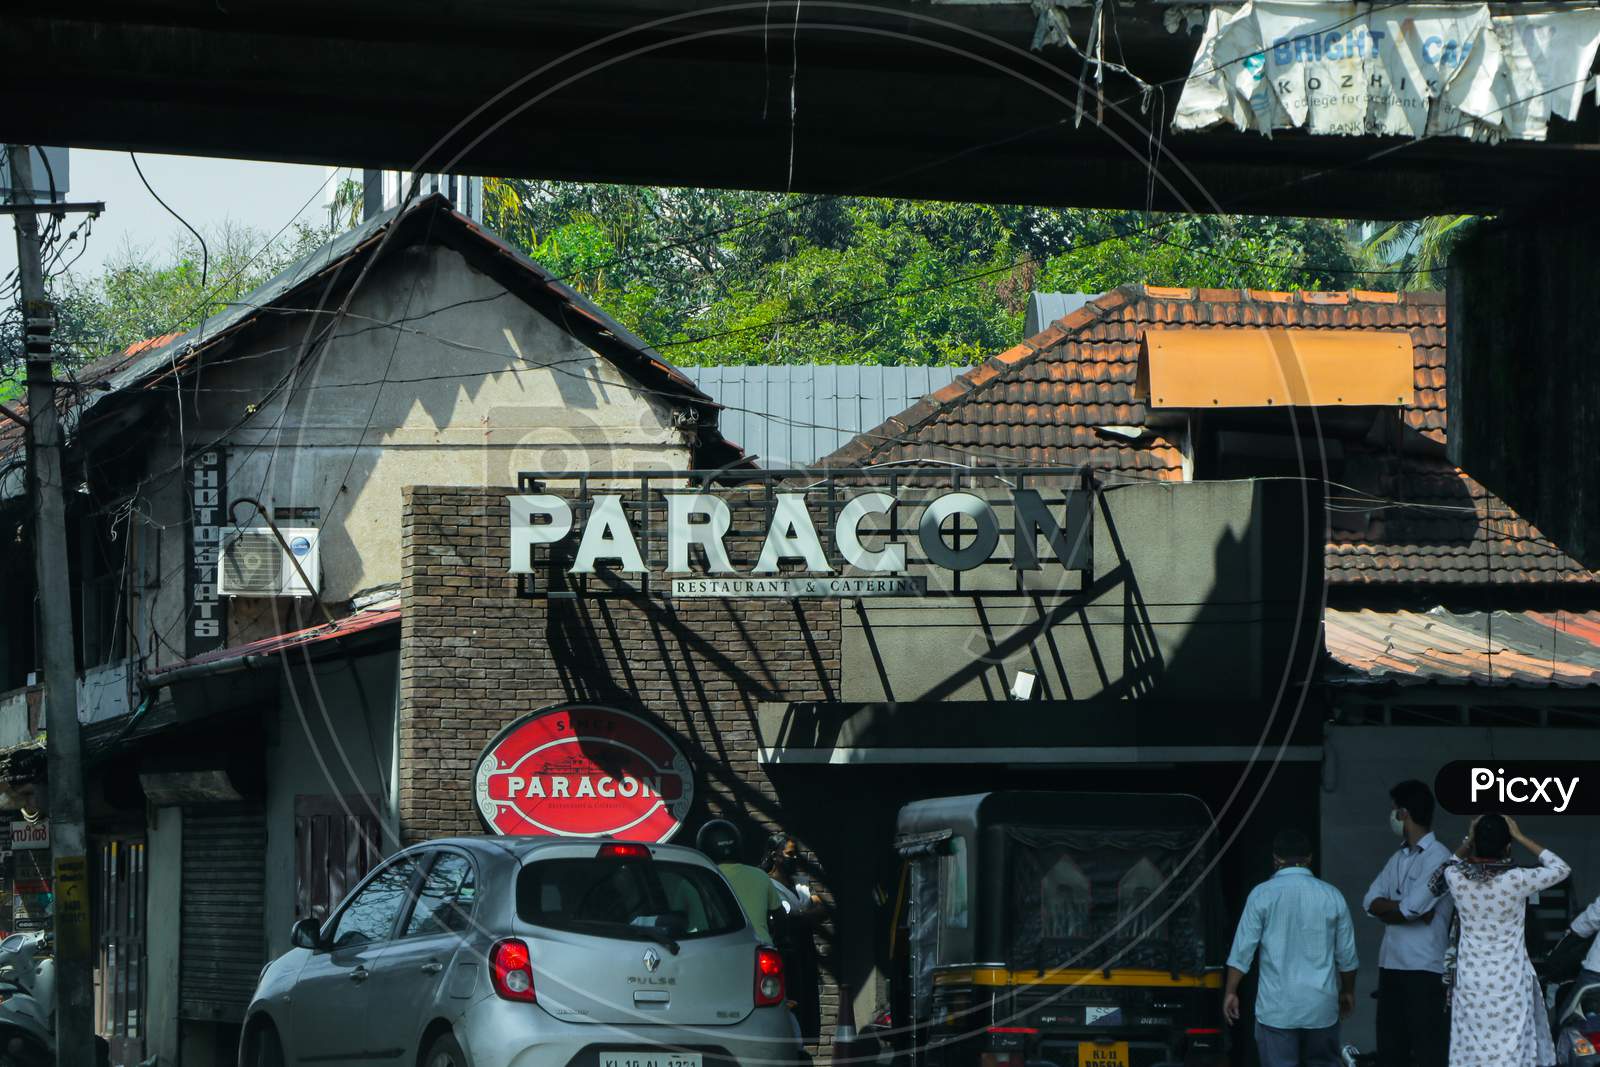 paragon hotel calicut during pandemic. shoot date 16/10/2020